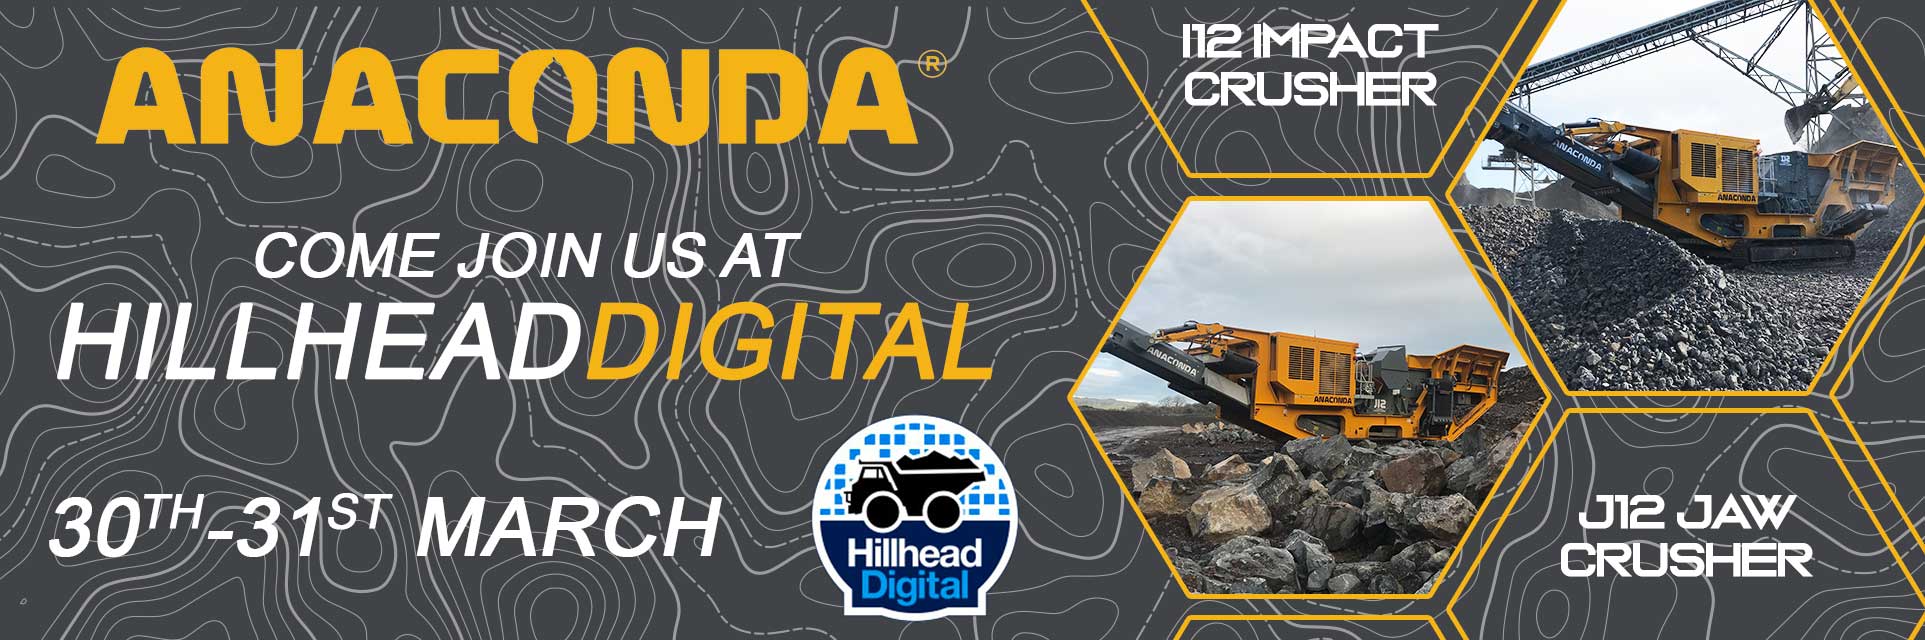 Anaconda Equipment introduce the I12 Impact Crusher at Hillhead Digital